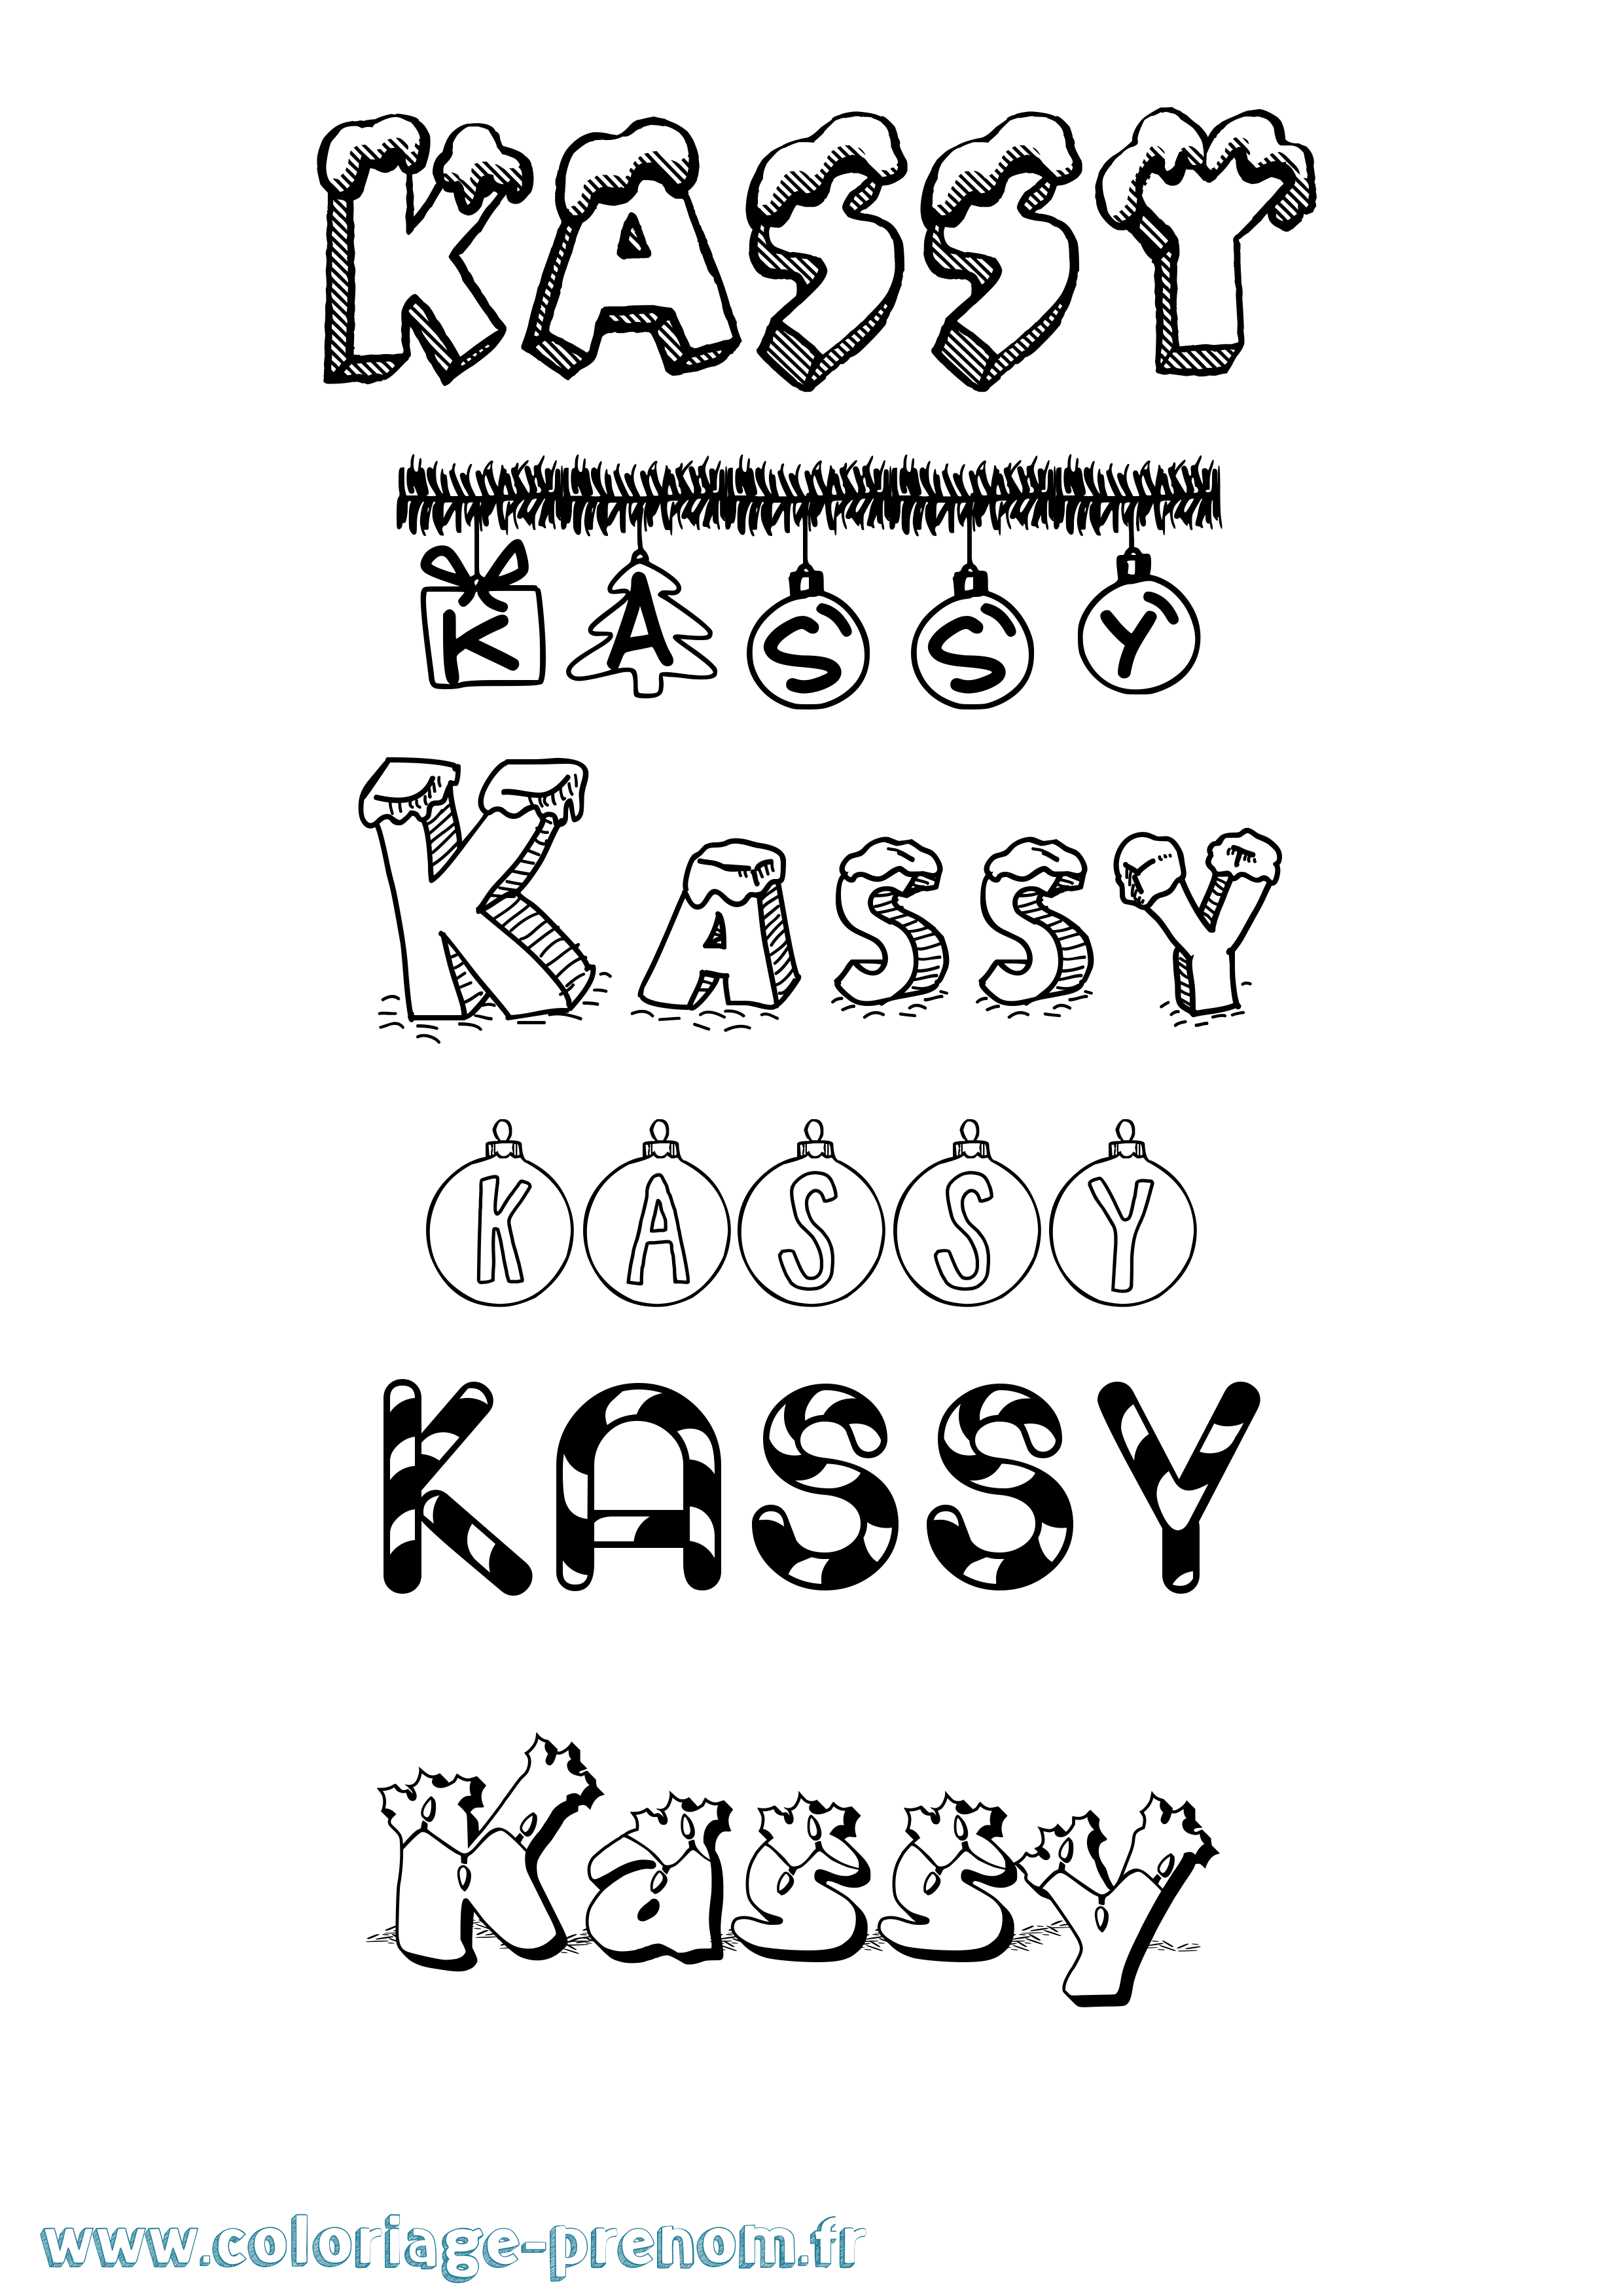 Coloriage prénom Kassy Noël